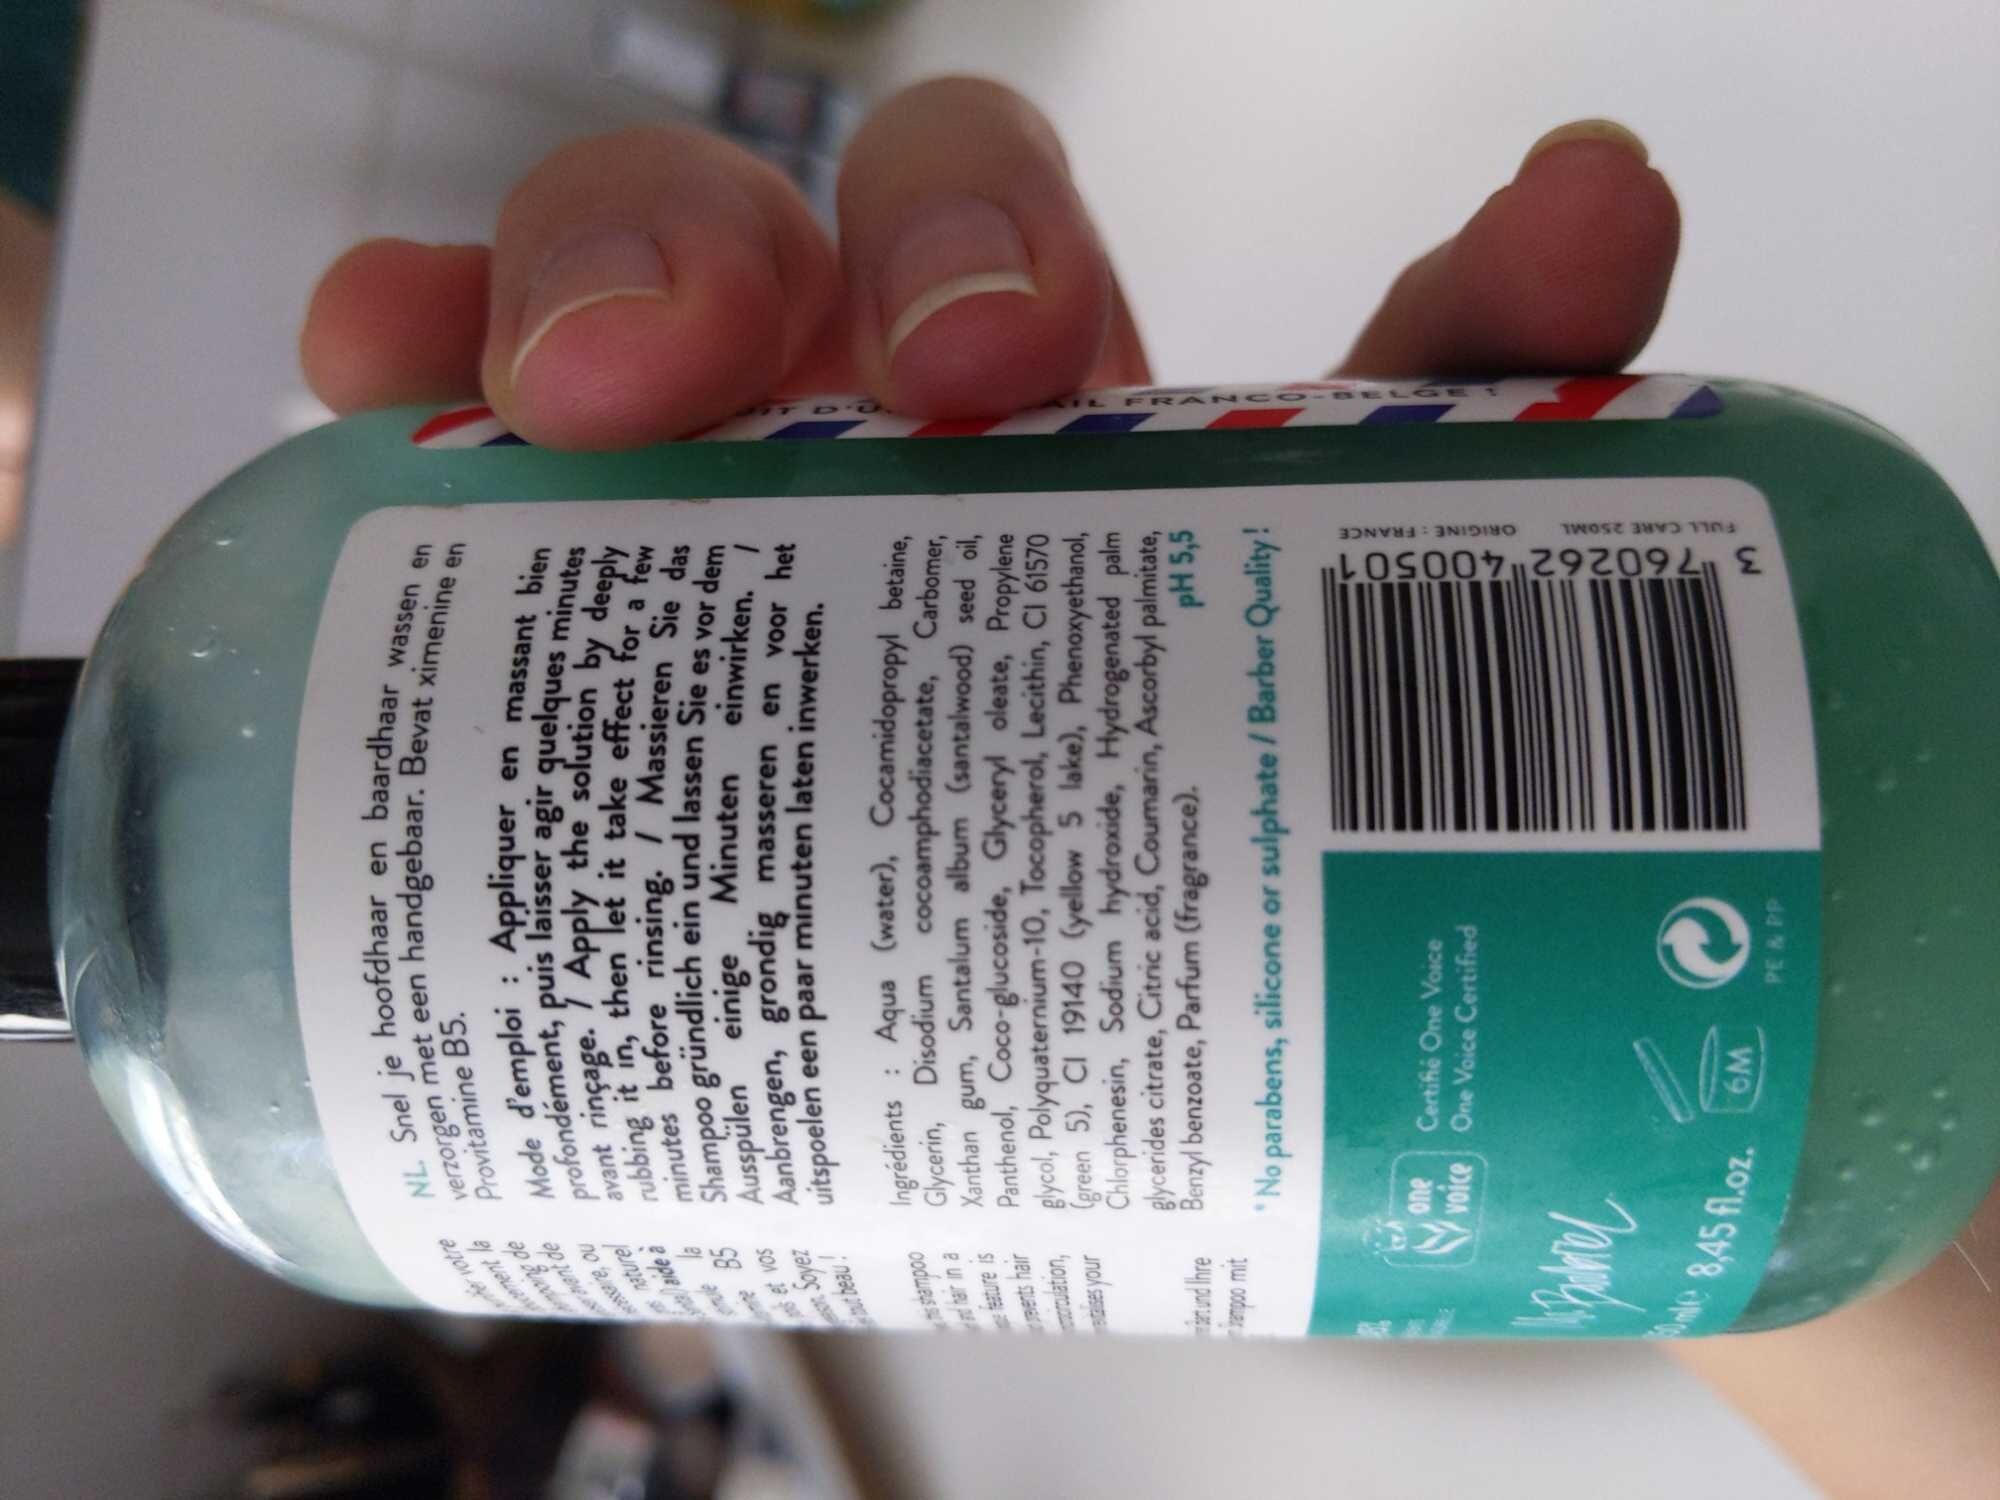 Full Care shampoing de soin - Product - fr